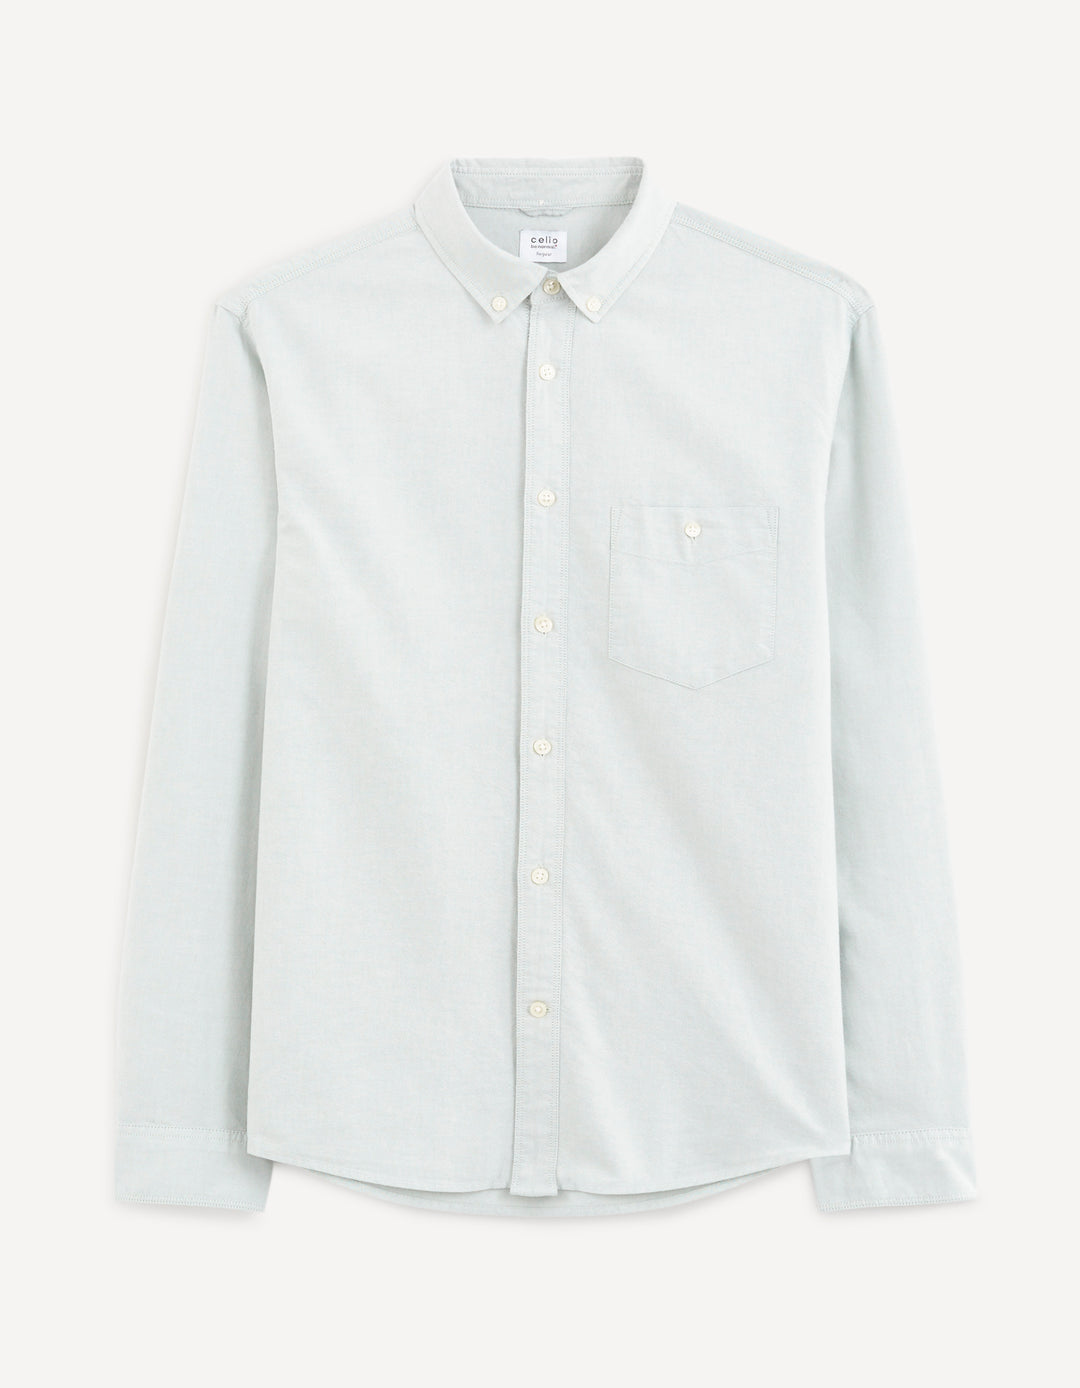 Regular 100% cotton oxford shirt